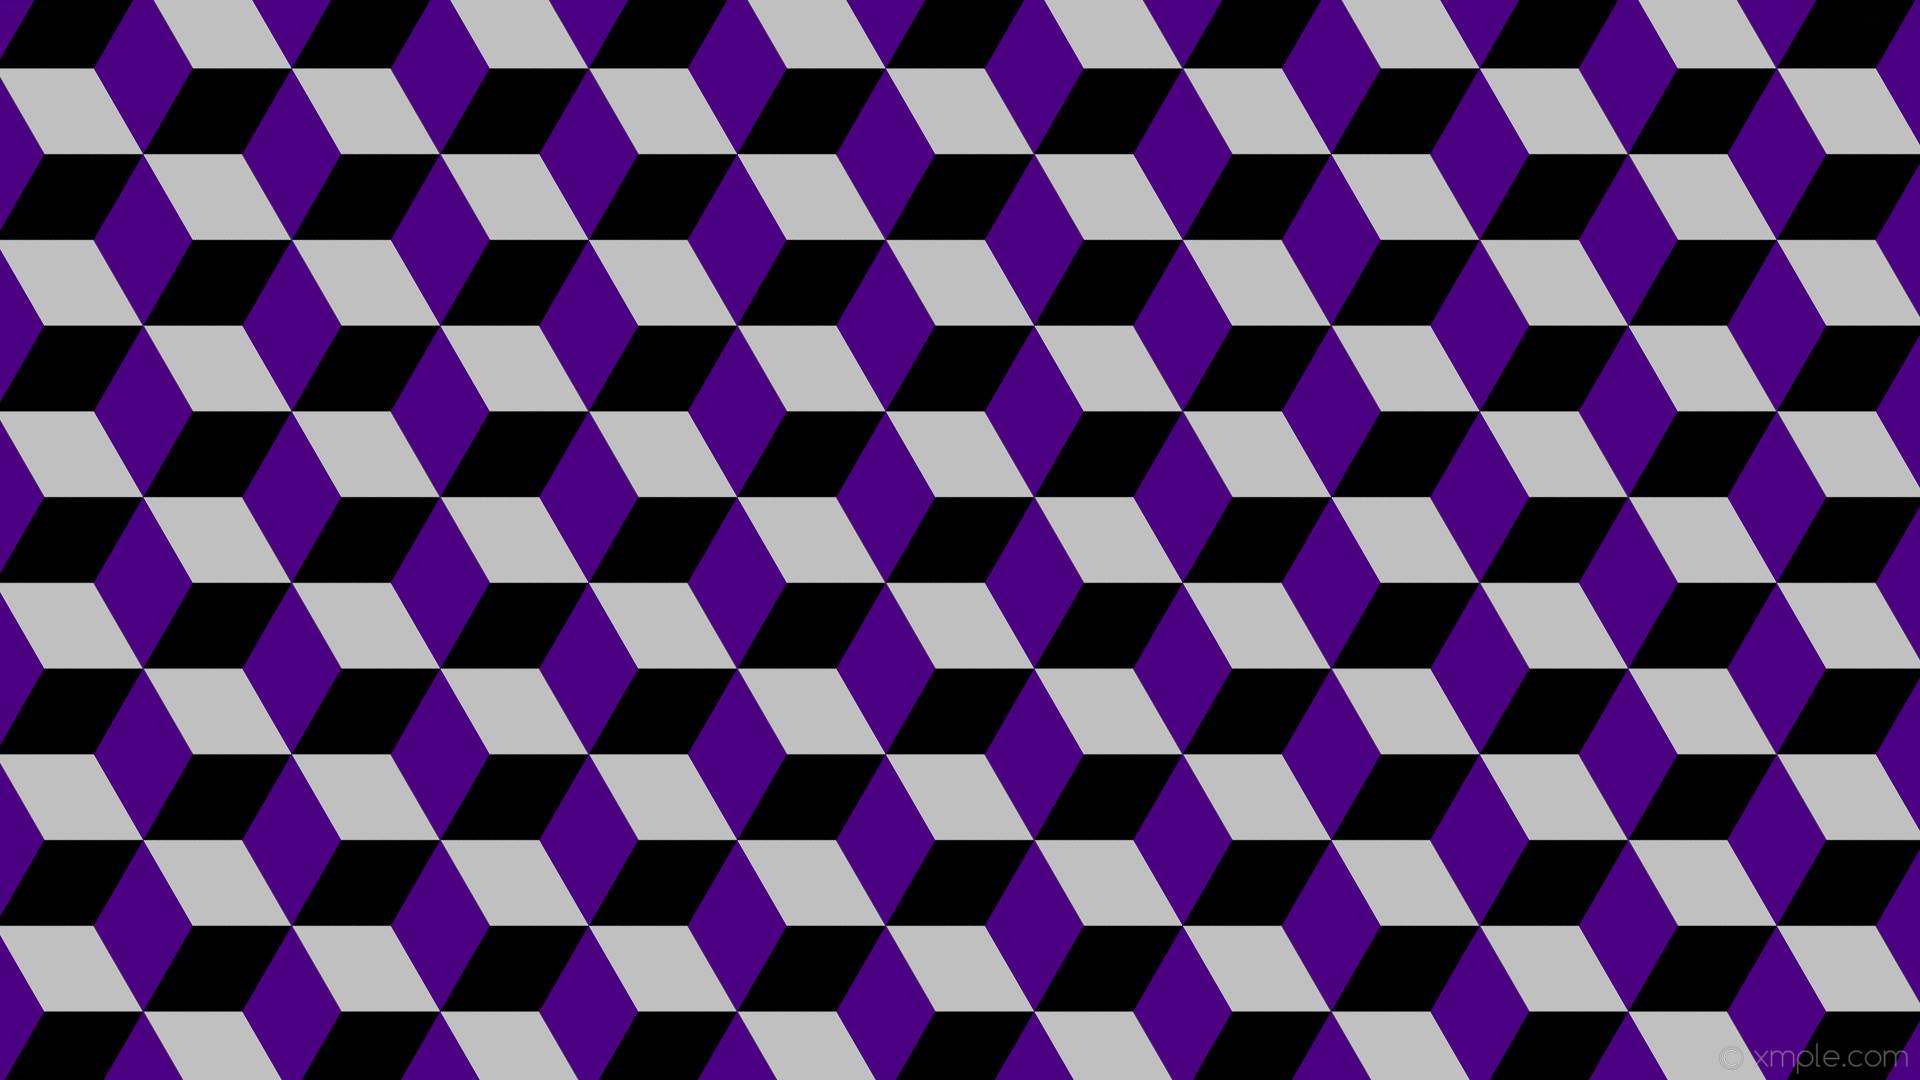 1920x1080 wallpaper purple grey 3d cubes black silver indigo #000000 #c0c0c0 #4b0082  30Â°